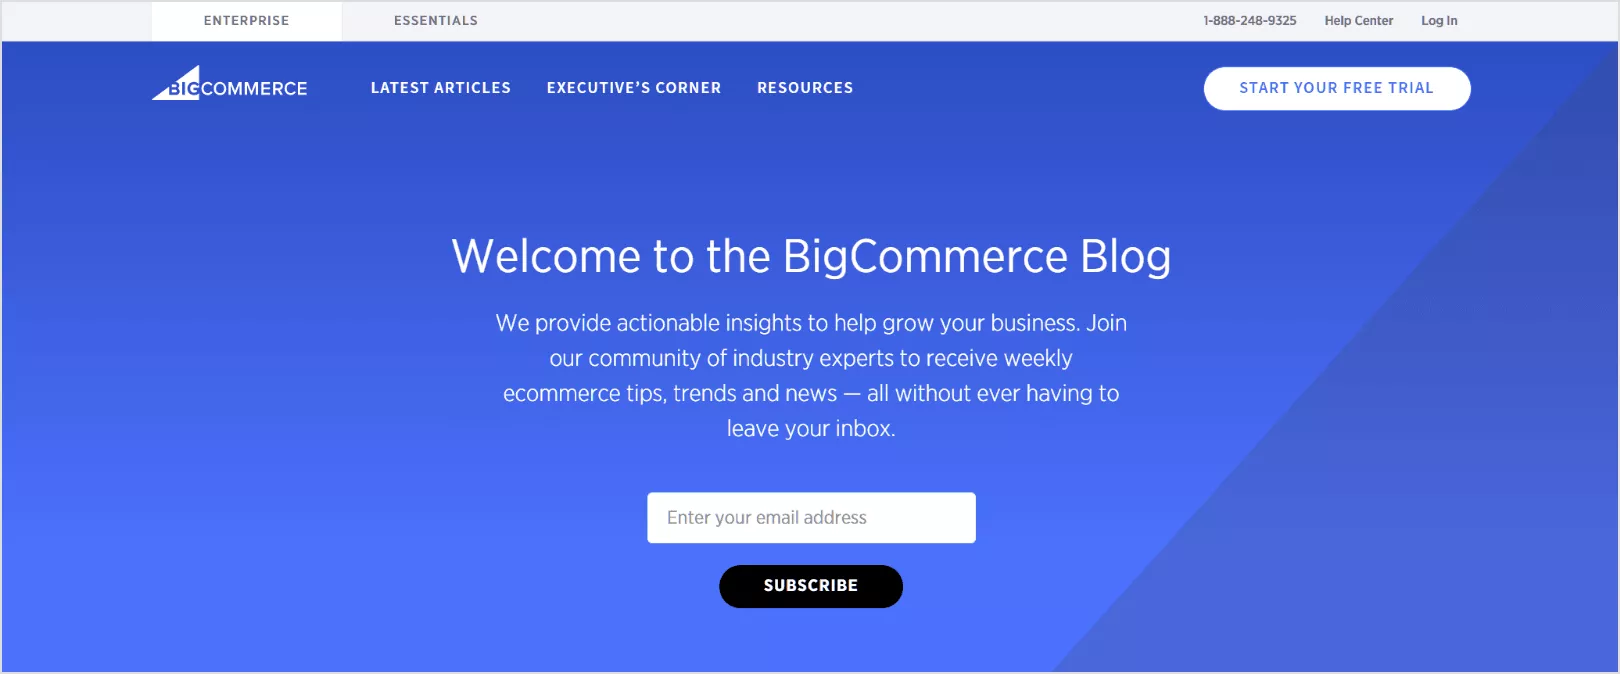 Der BigCommerce Blog